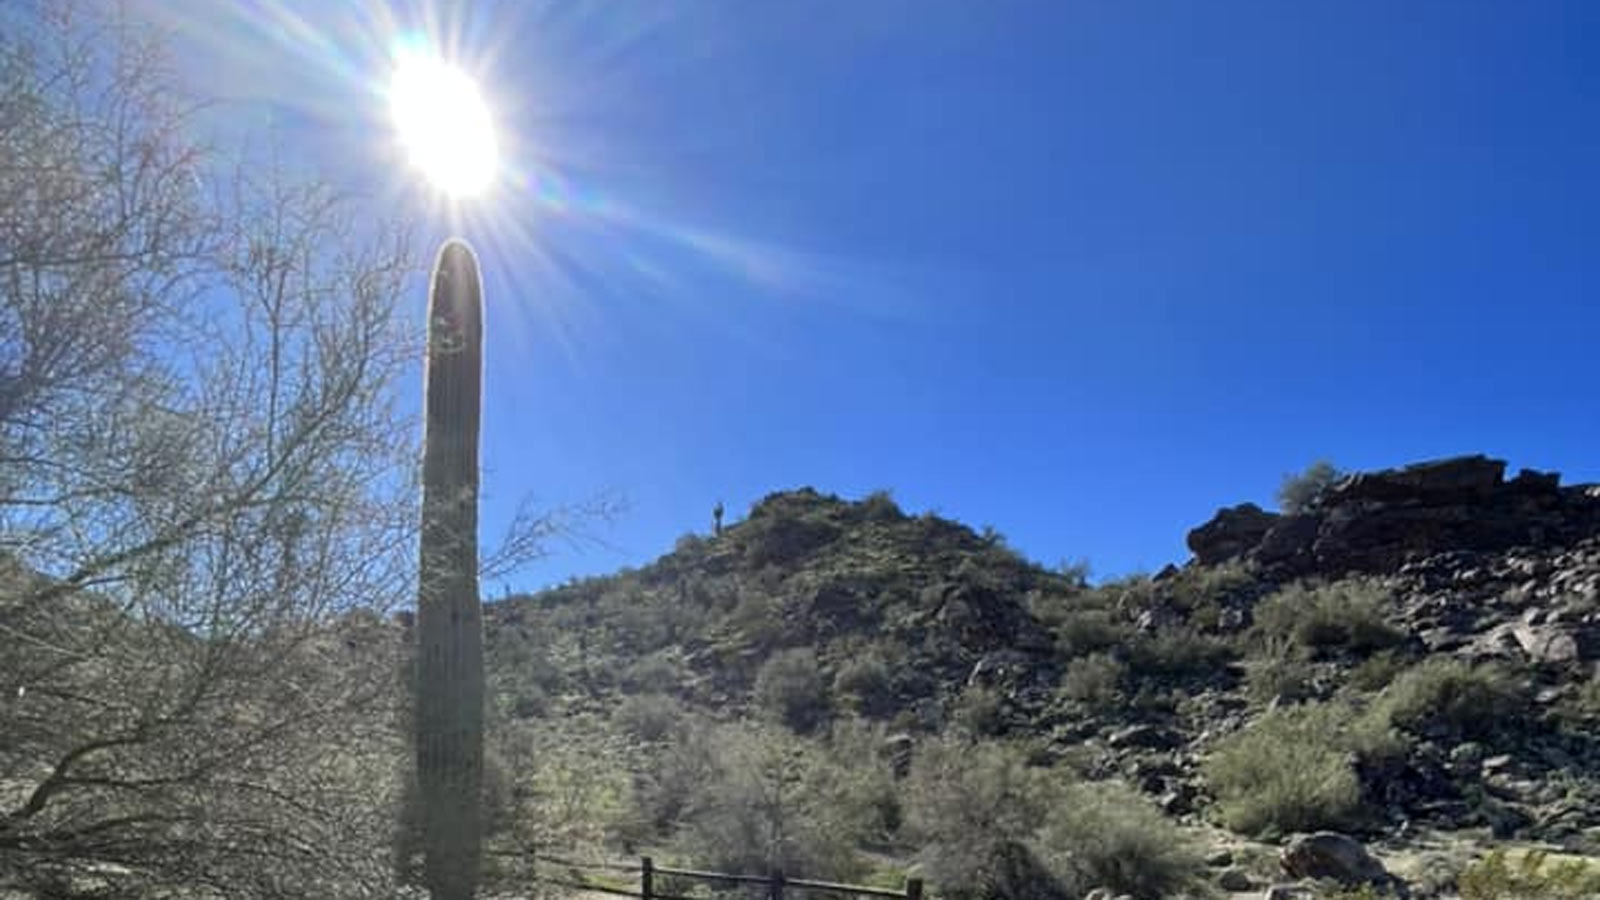 The sun shines in a blue sky over a Saguaro cactus in a desert landscape in Phoenix, Arizona....